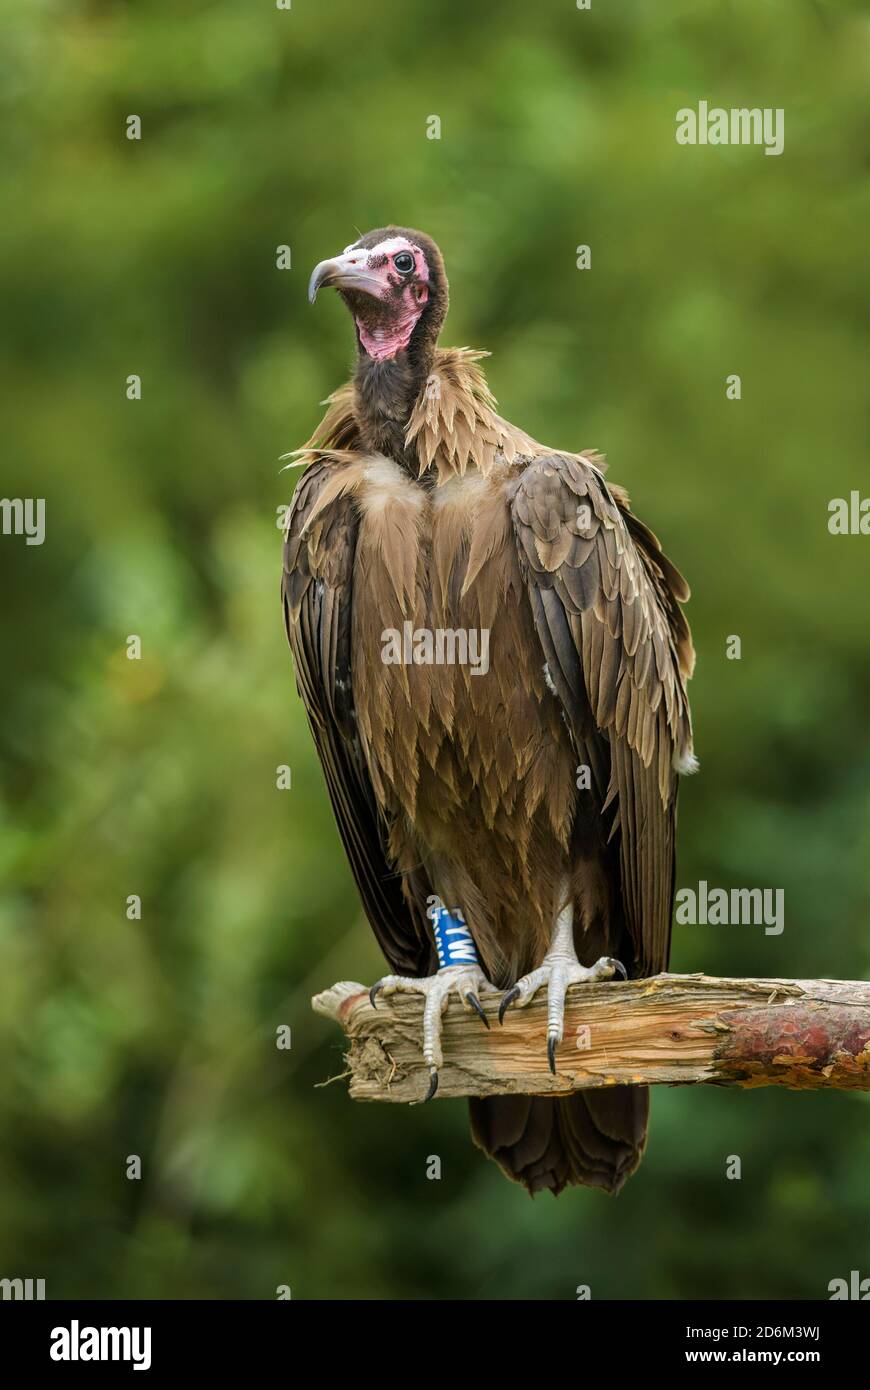 Hooded Vultures of Senegal